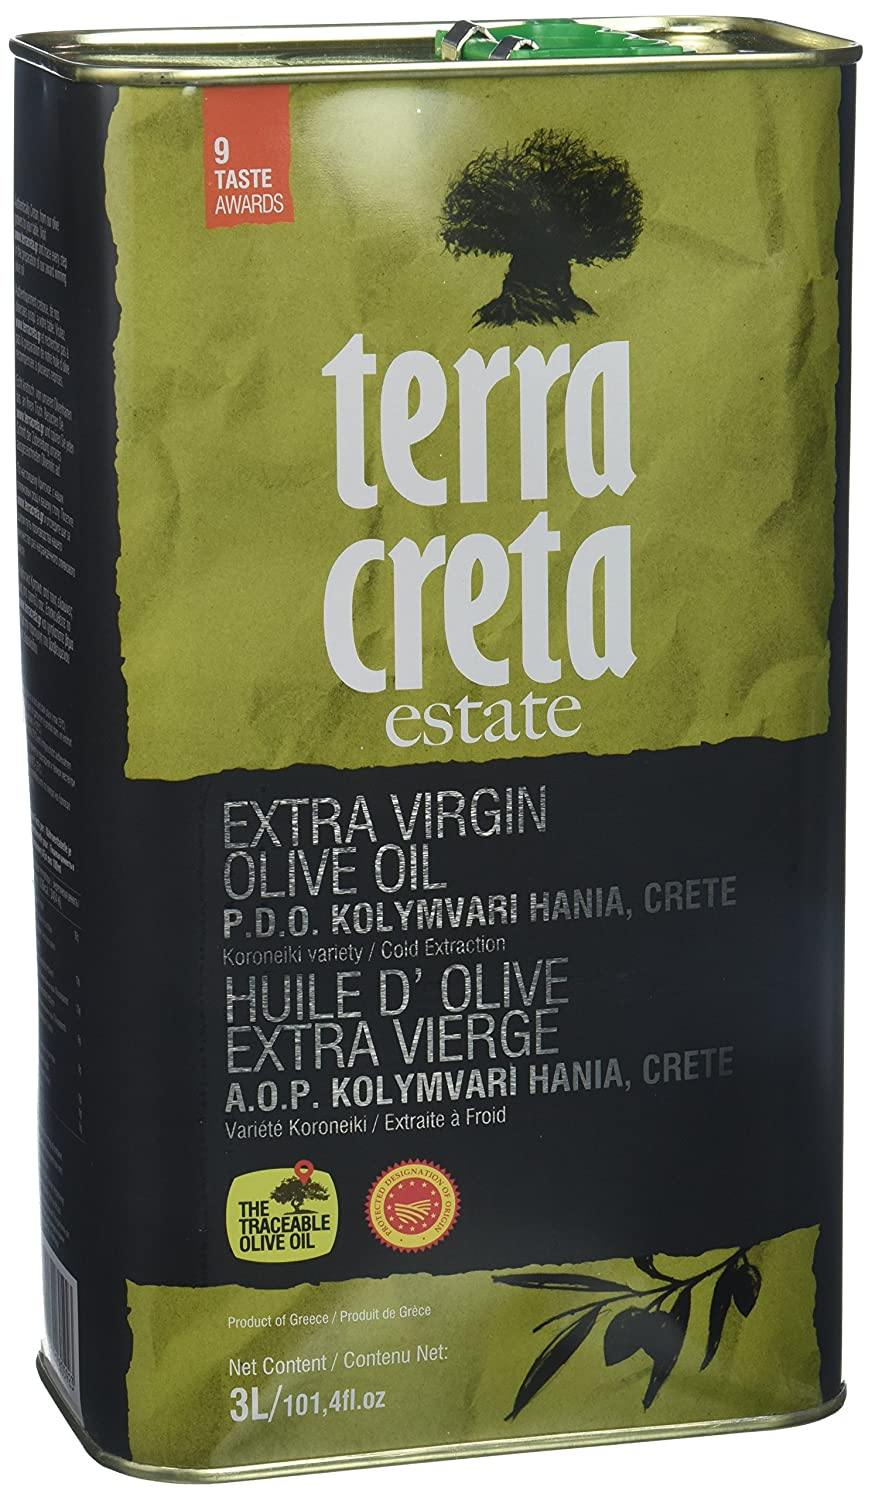 Terra Creta | Award Winning | Kolymvari Estates | 100% Pure Greek Olive Oil | Co